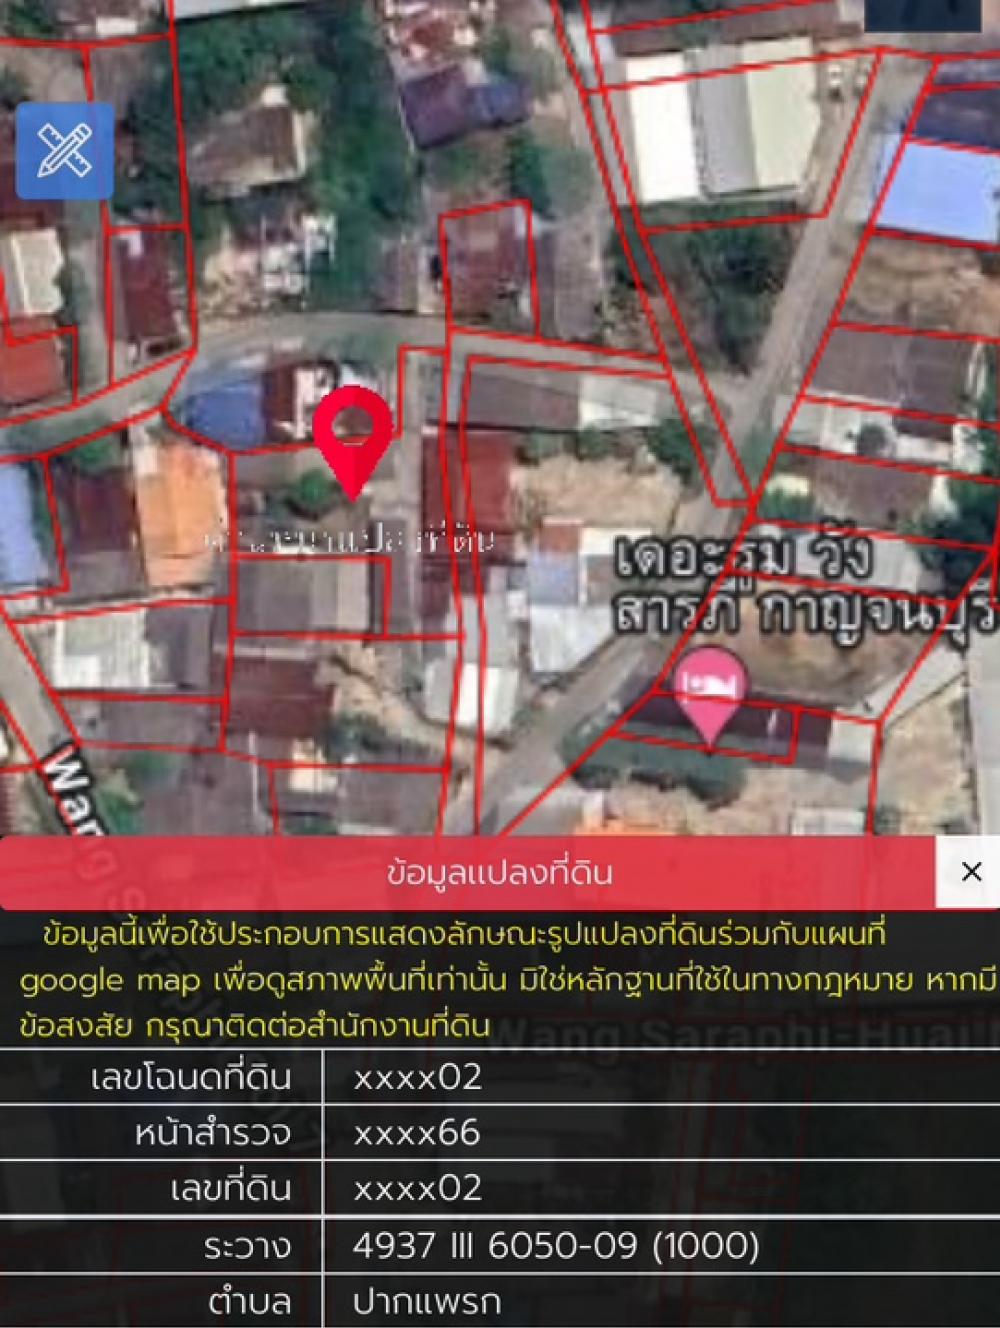 For SaleLandKanchanaburi : #Land for sale with buildings Kanchanaburi city center